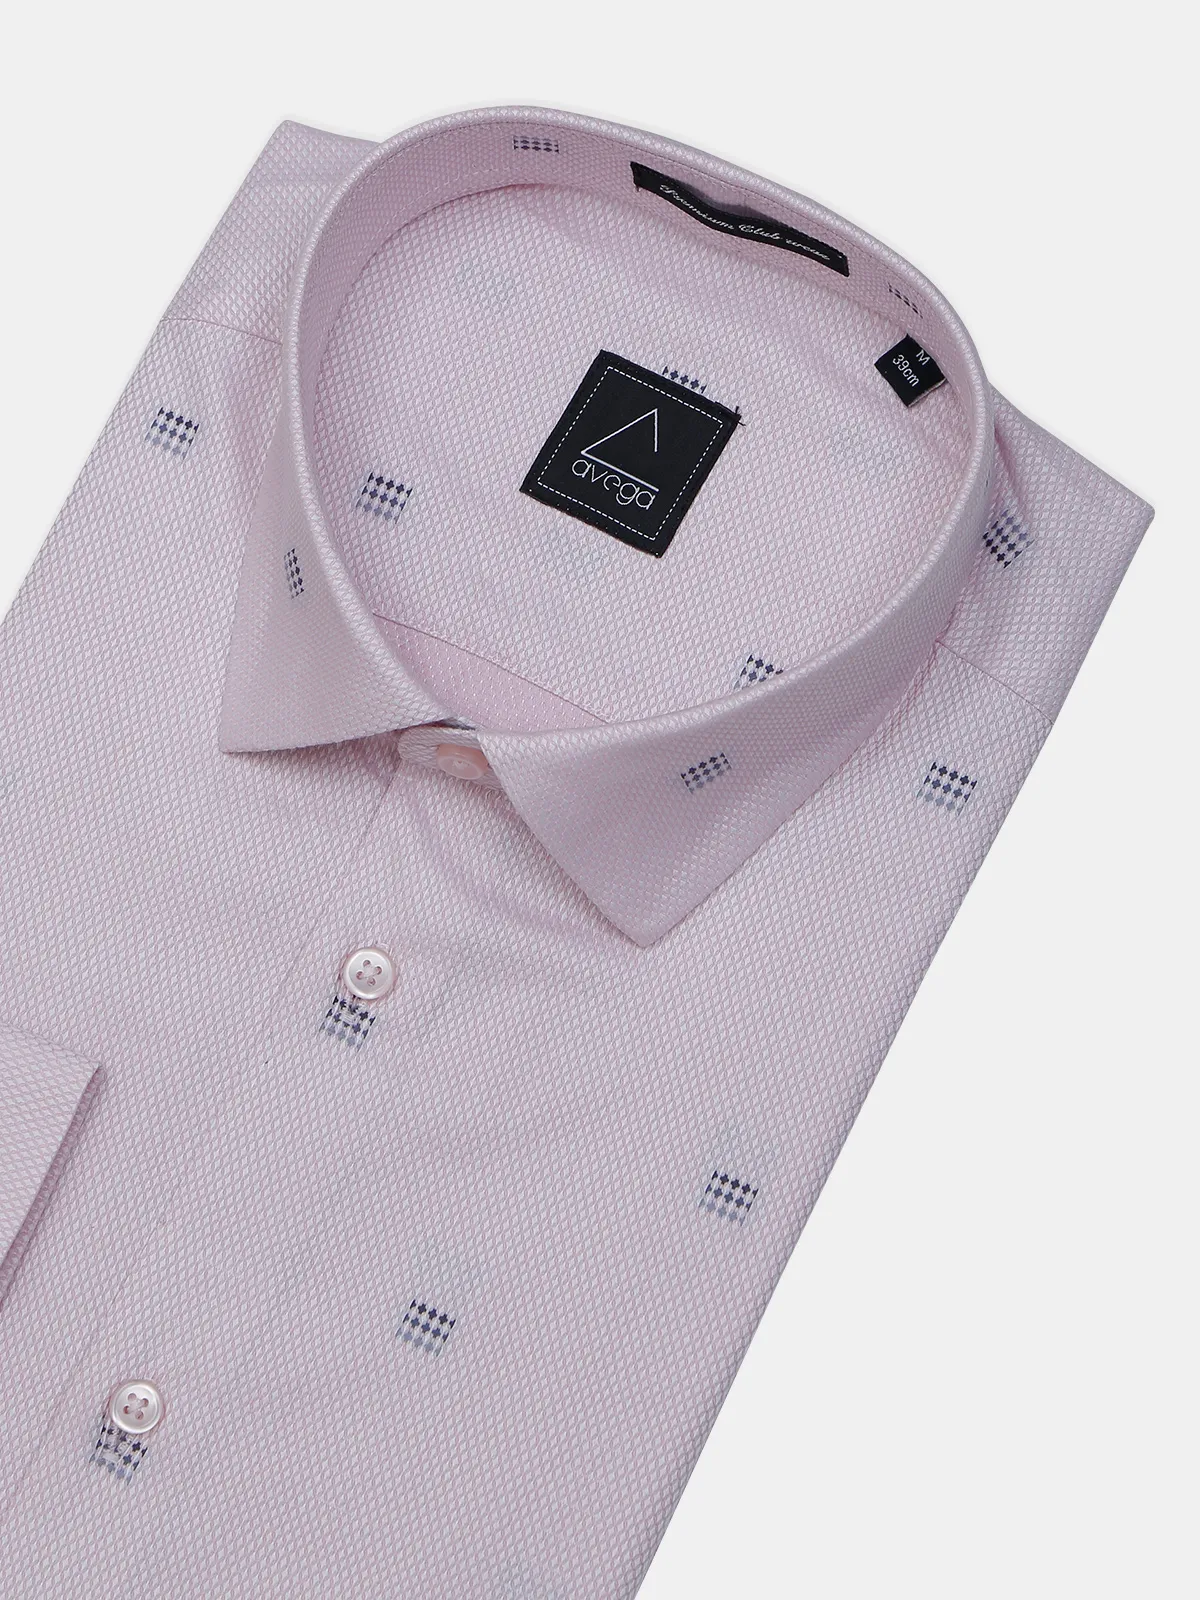 Avega light pink cotton printed shirt